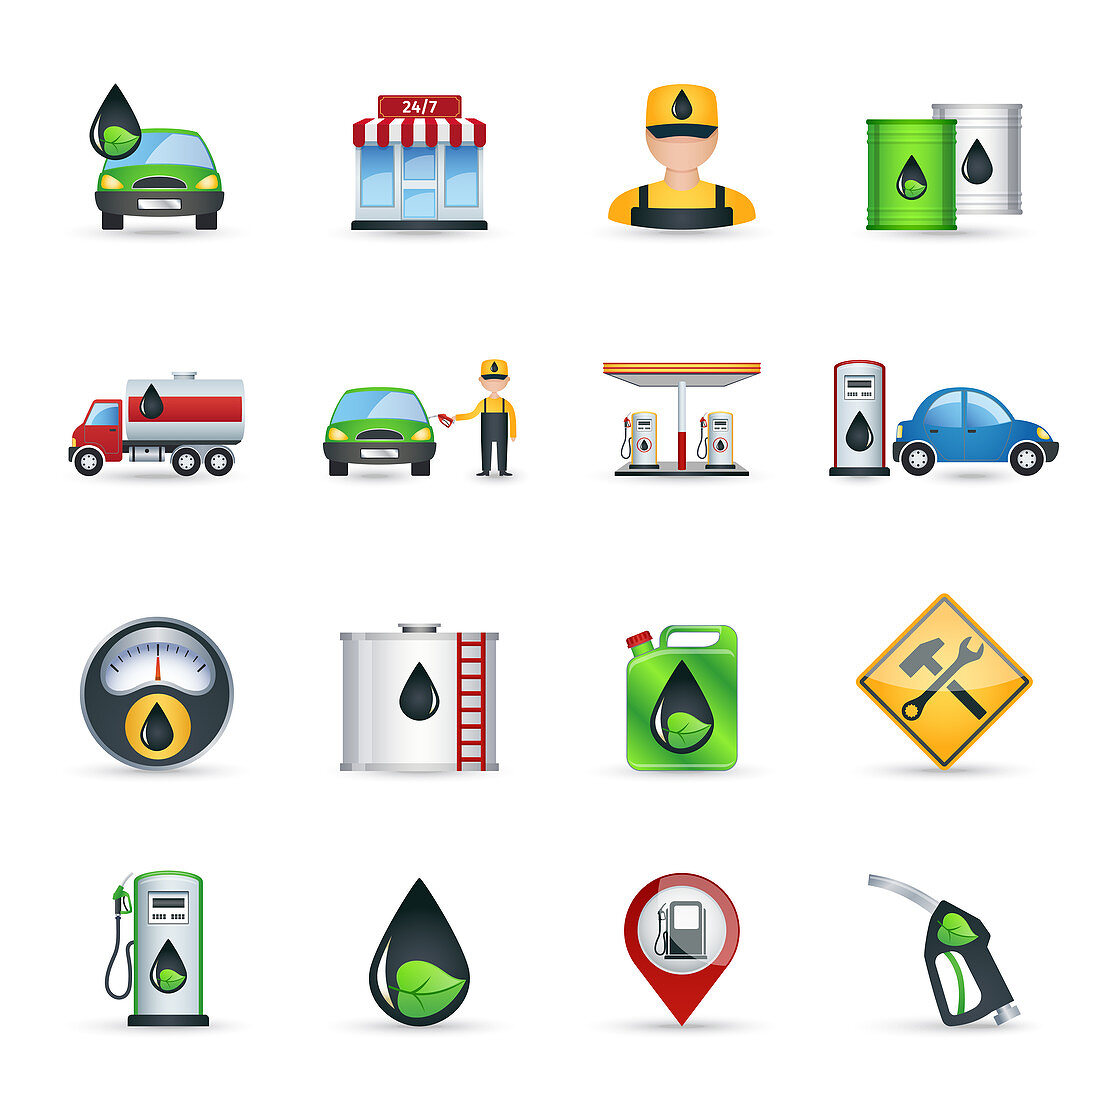 Petrol station icons, illustration